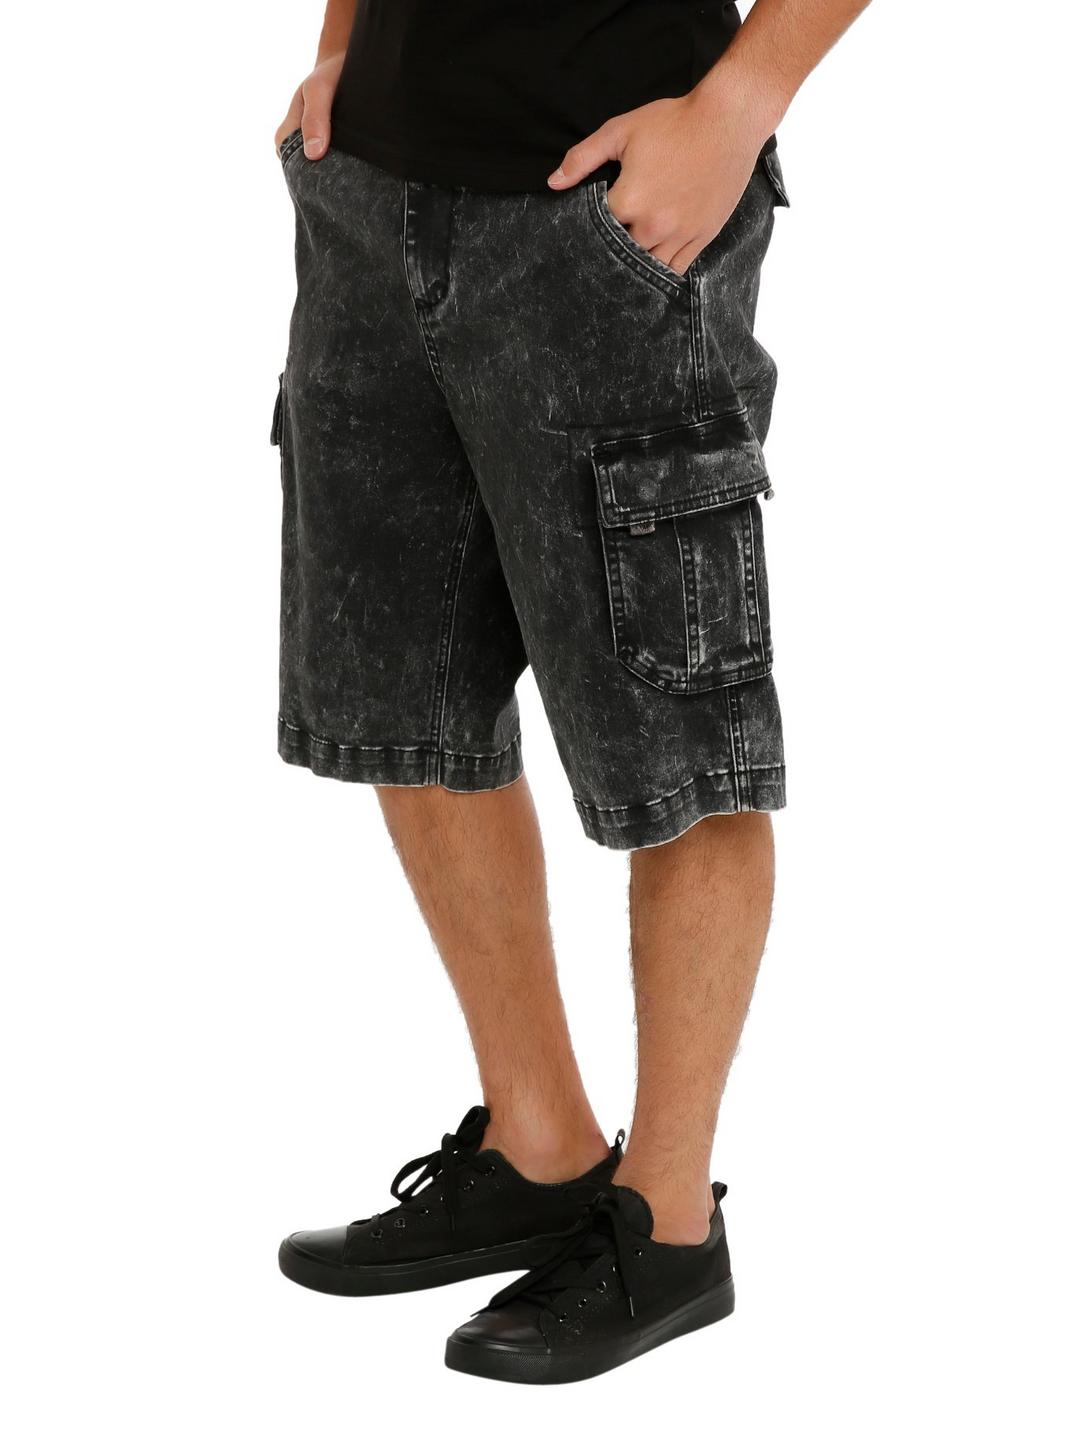 RUDE Black Wash Cargo Shorts, BLACK, hi-res